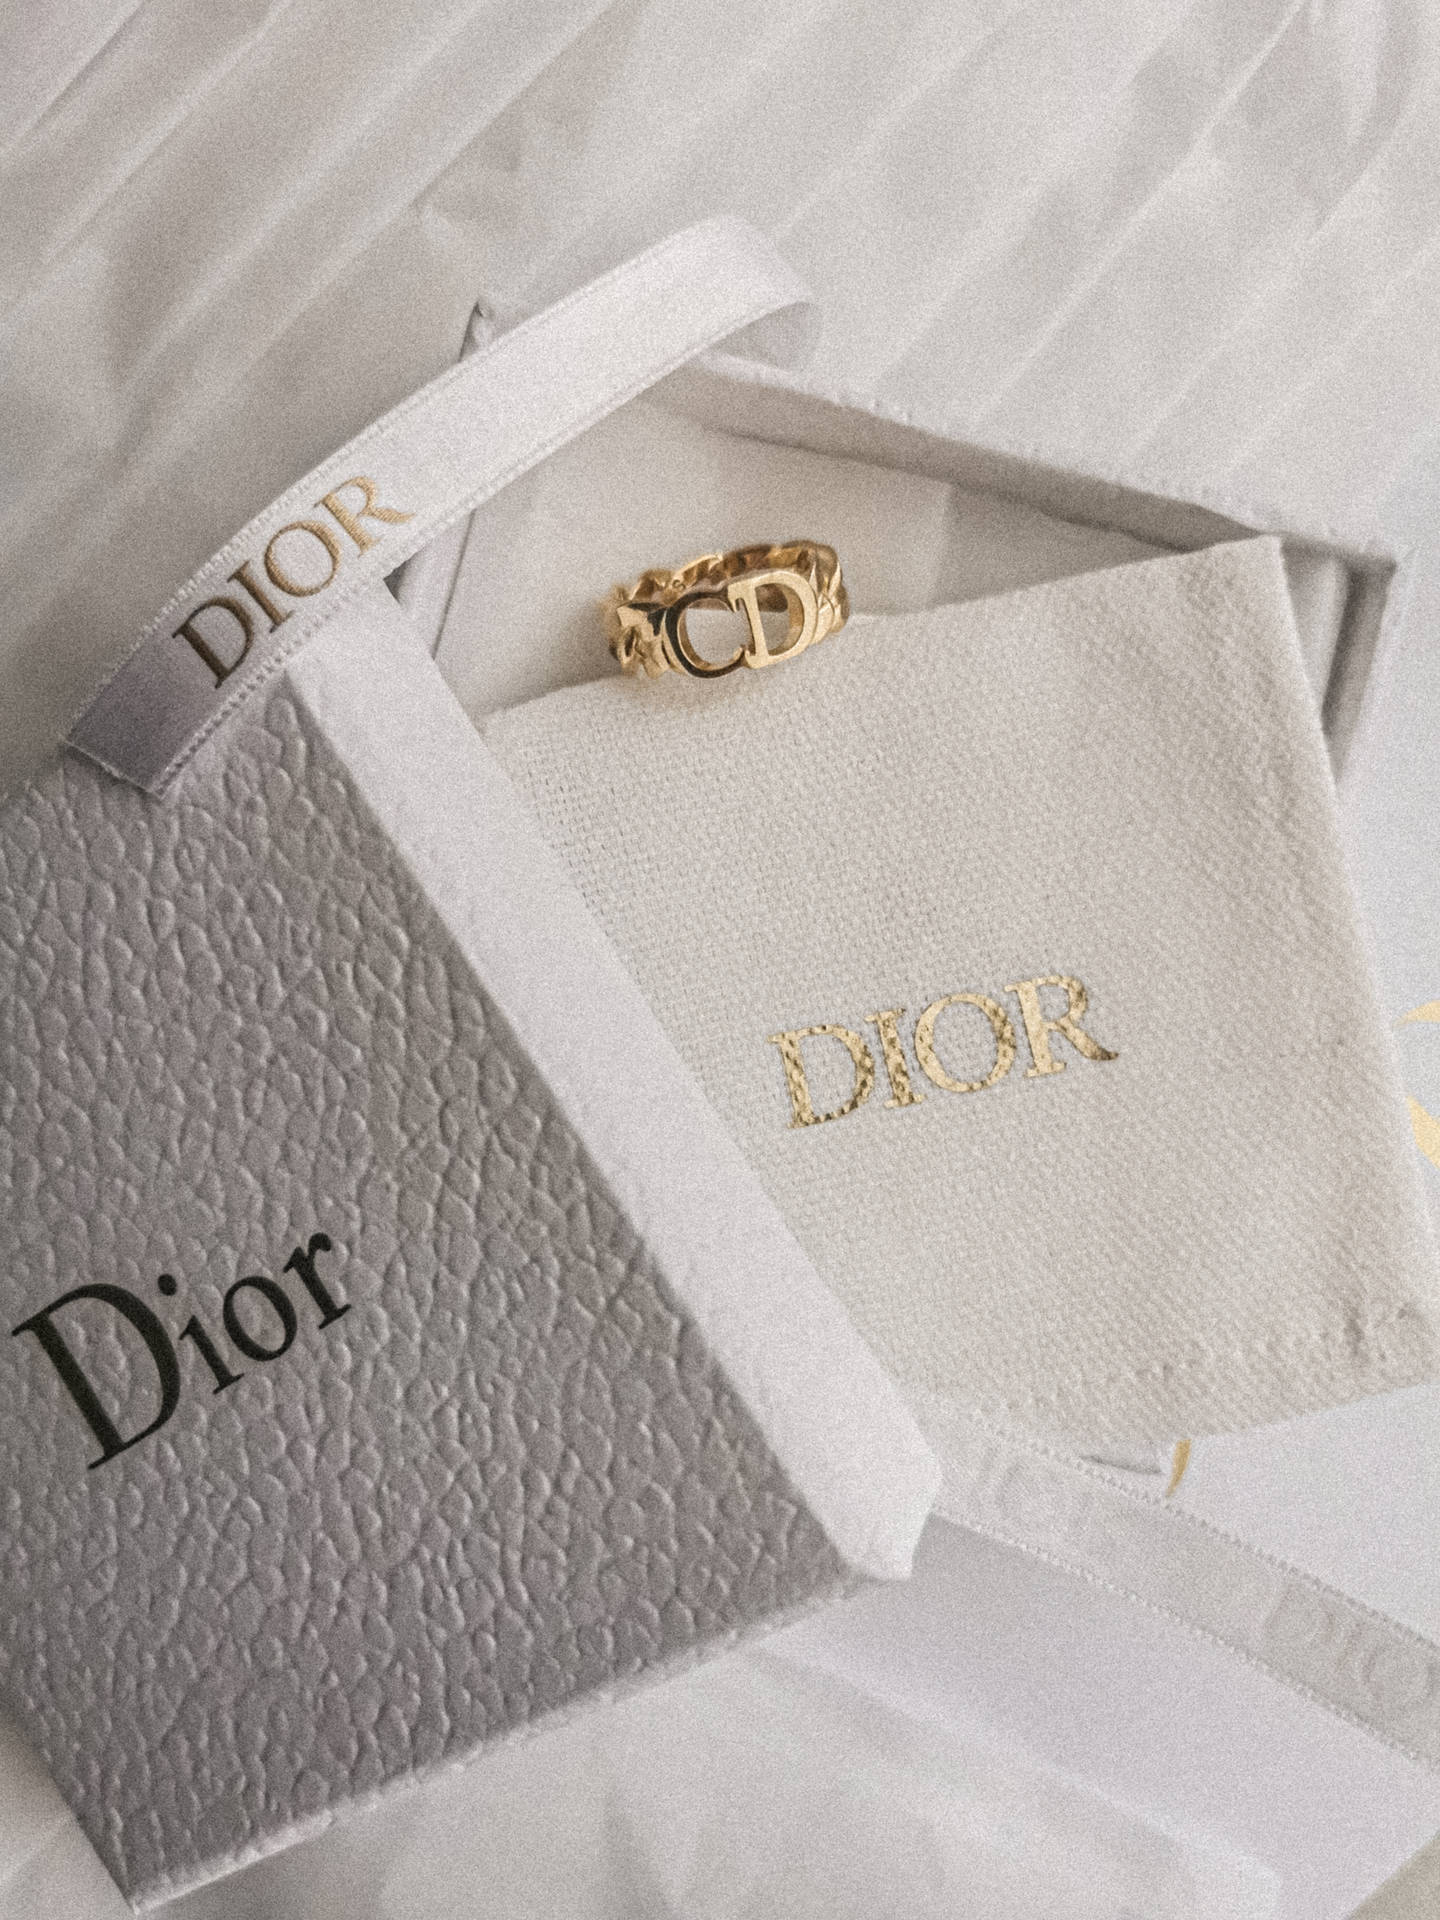 Dior Gold Ring And Gift Box Wallpaper